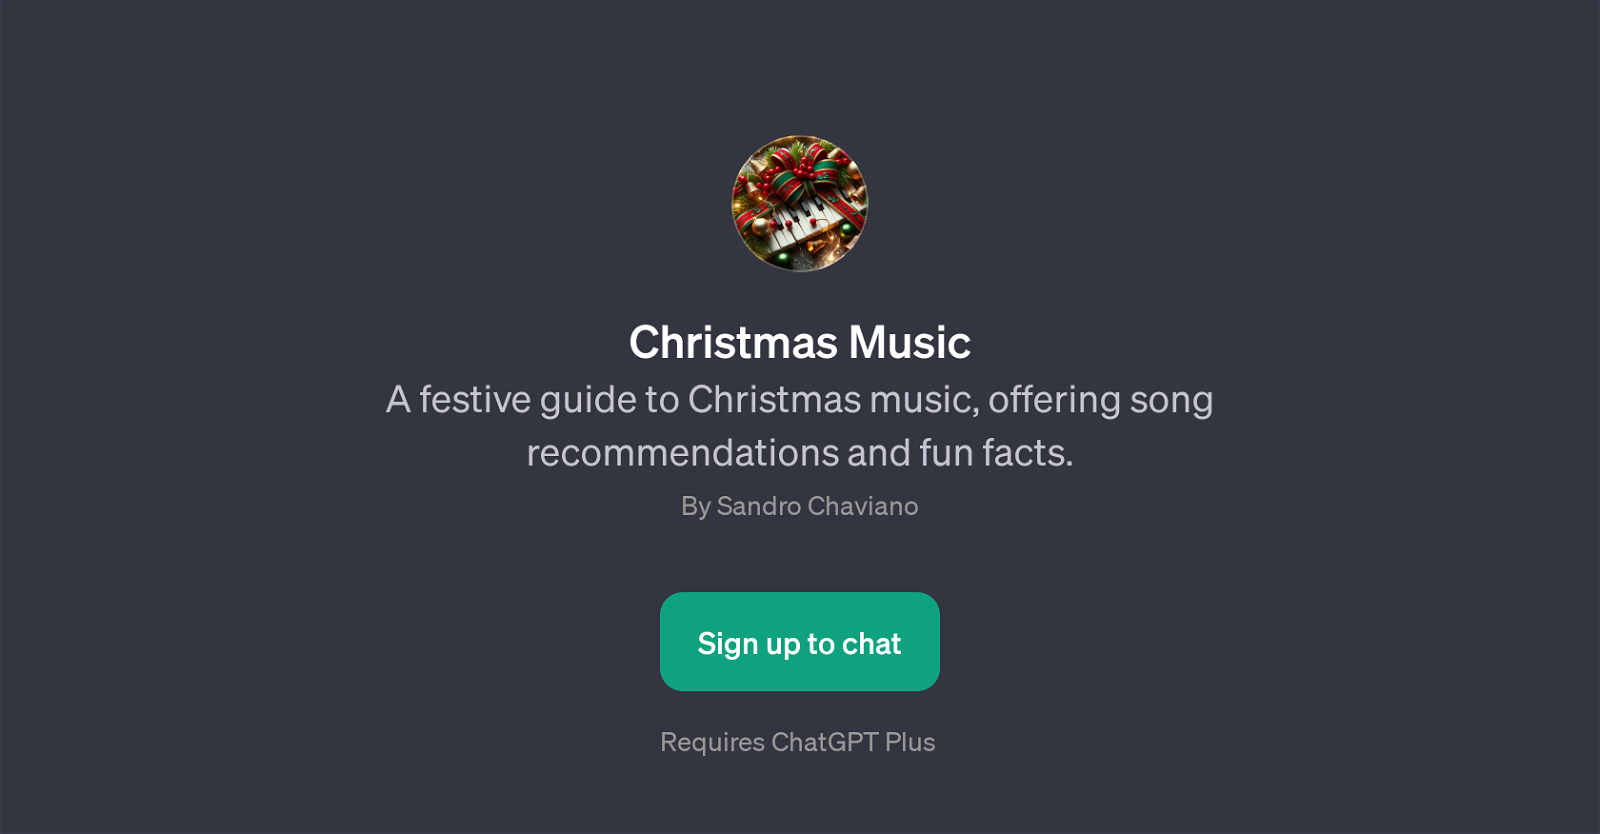 Christmas Music website